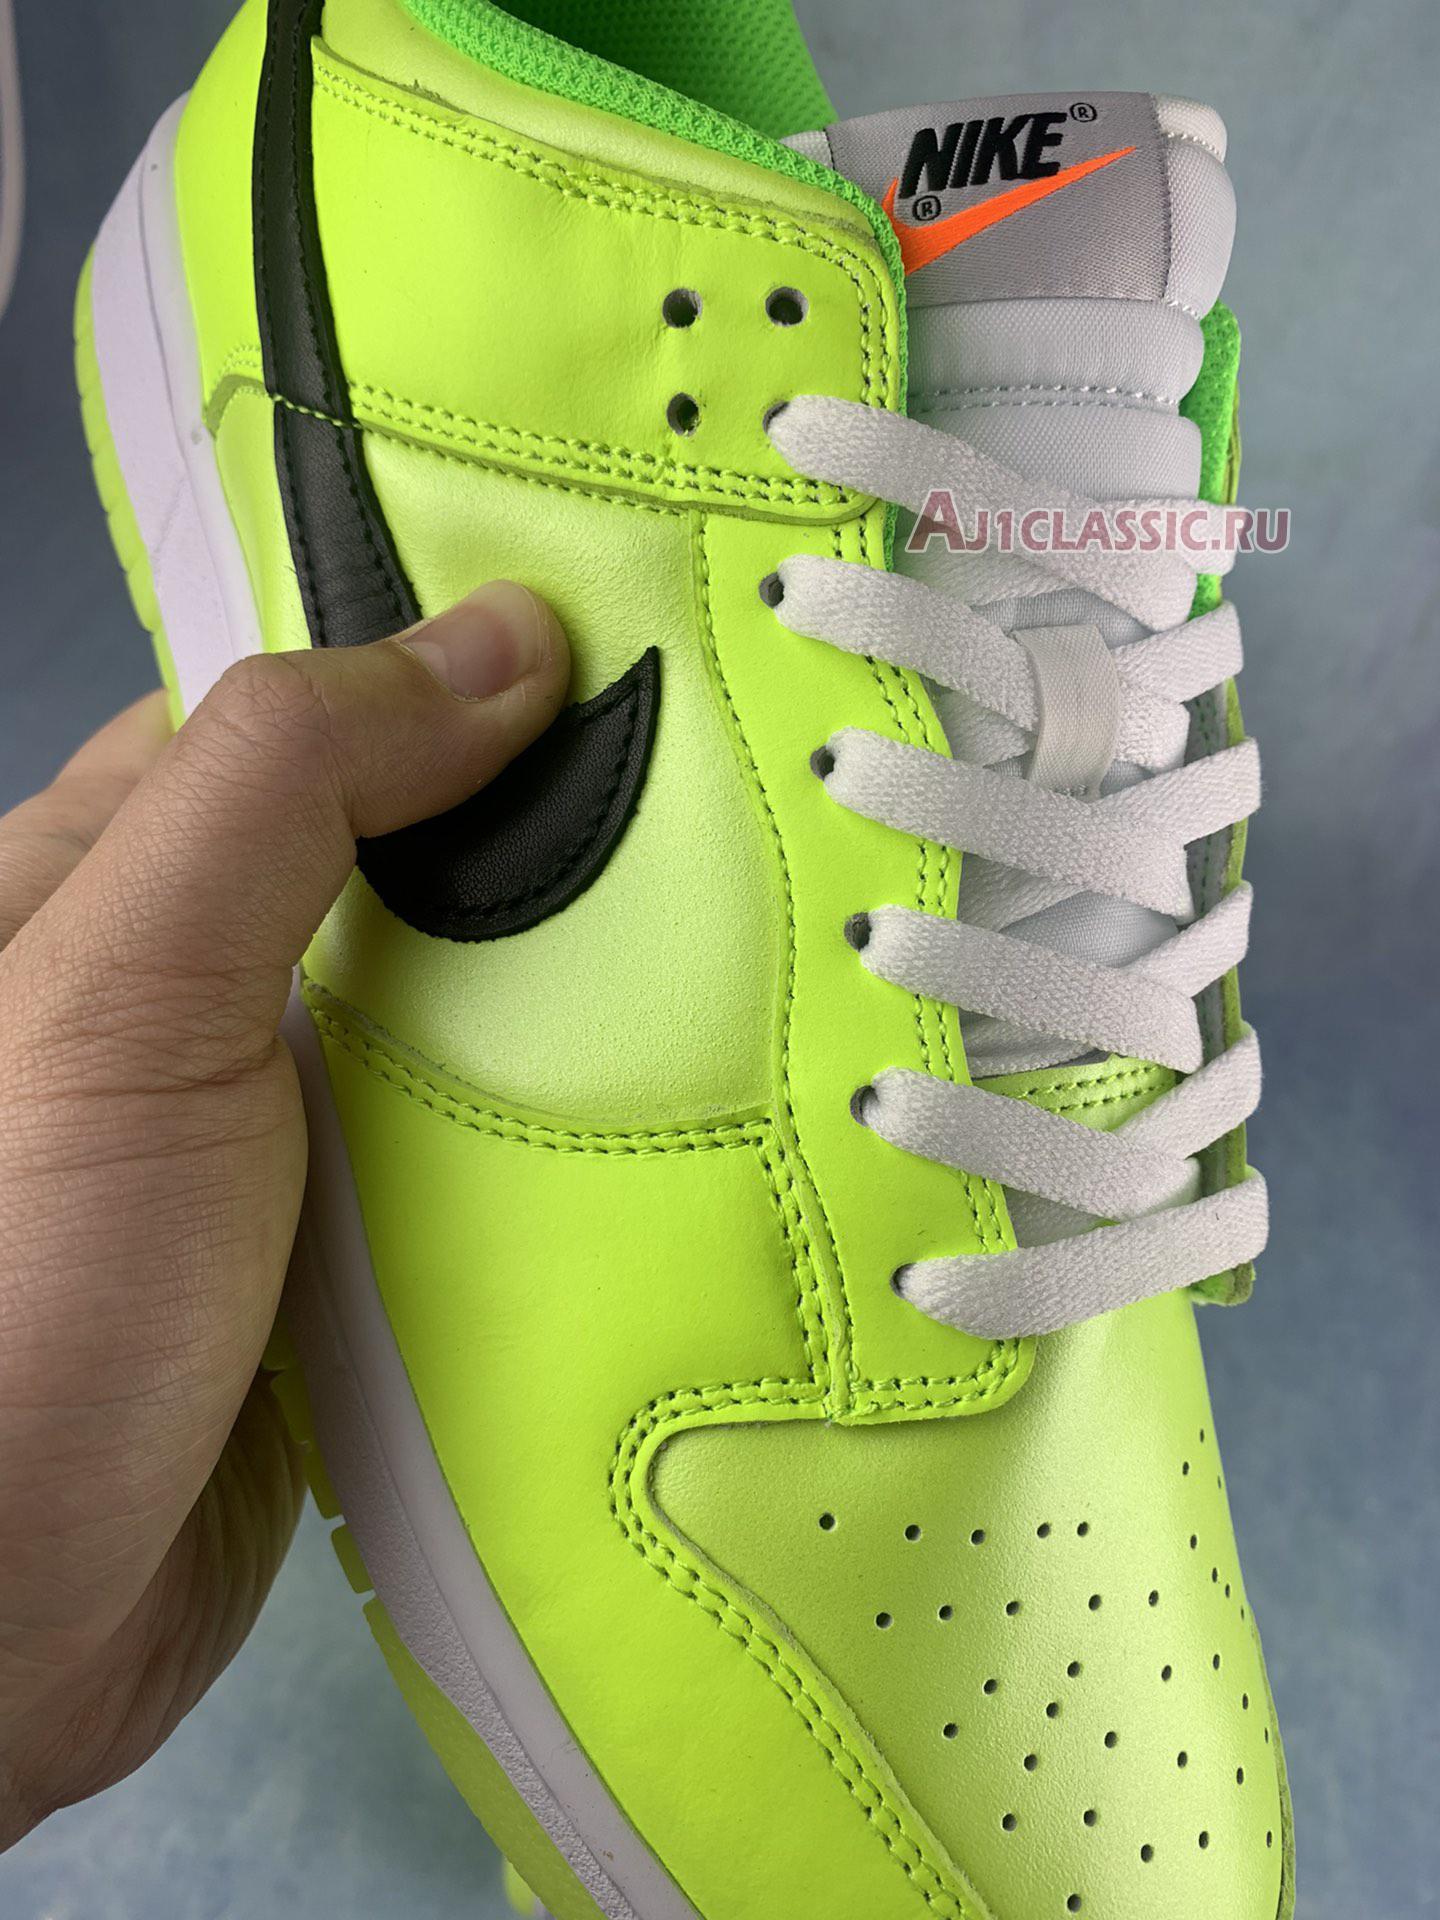 Nike Dunk Low "Volt" FJ4610-702